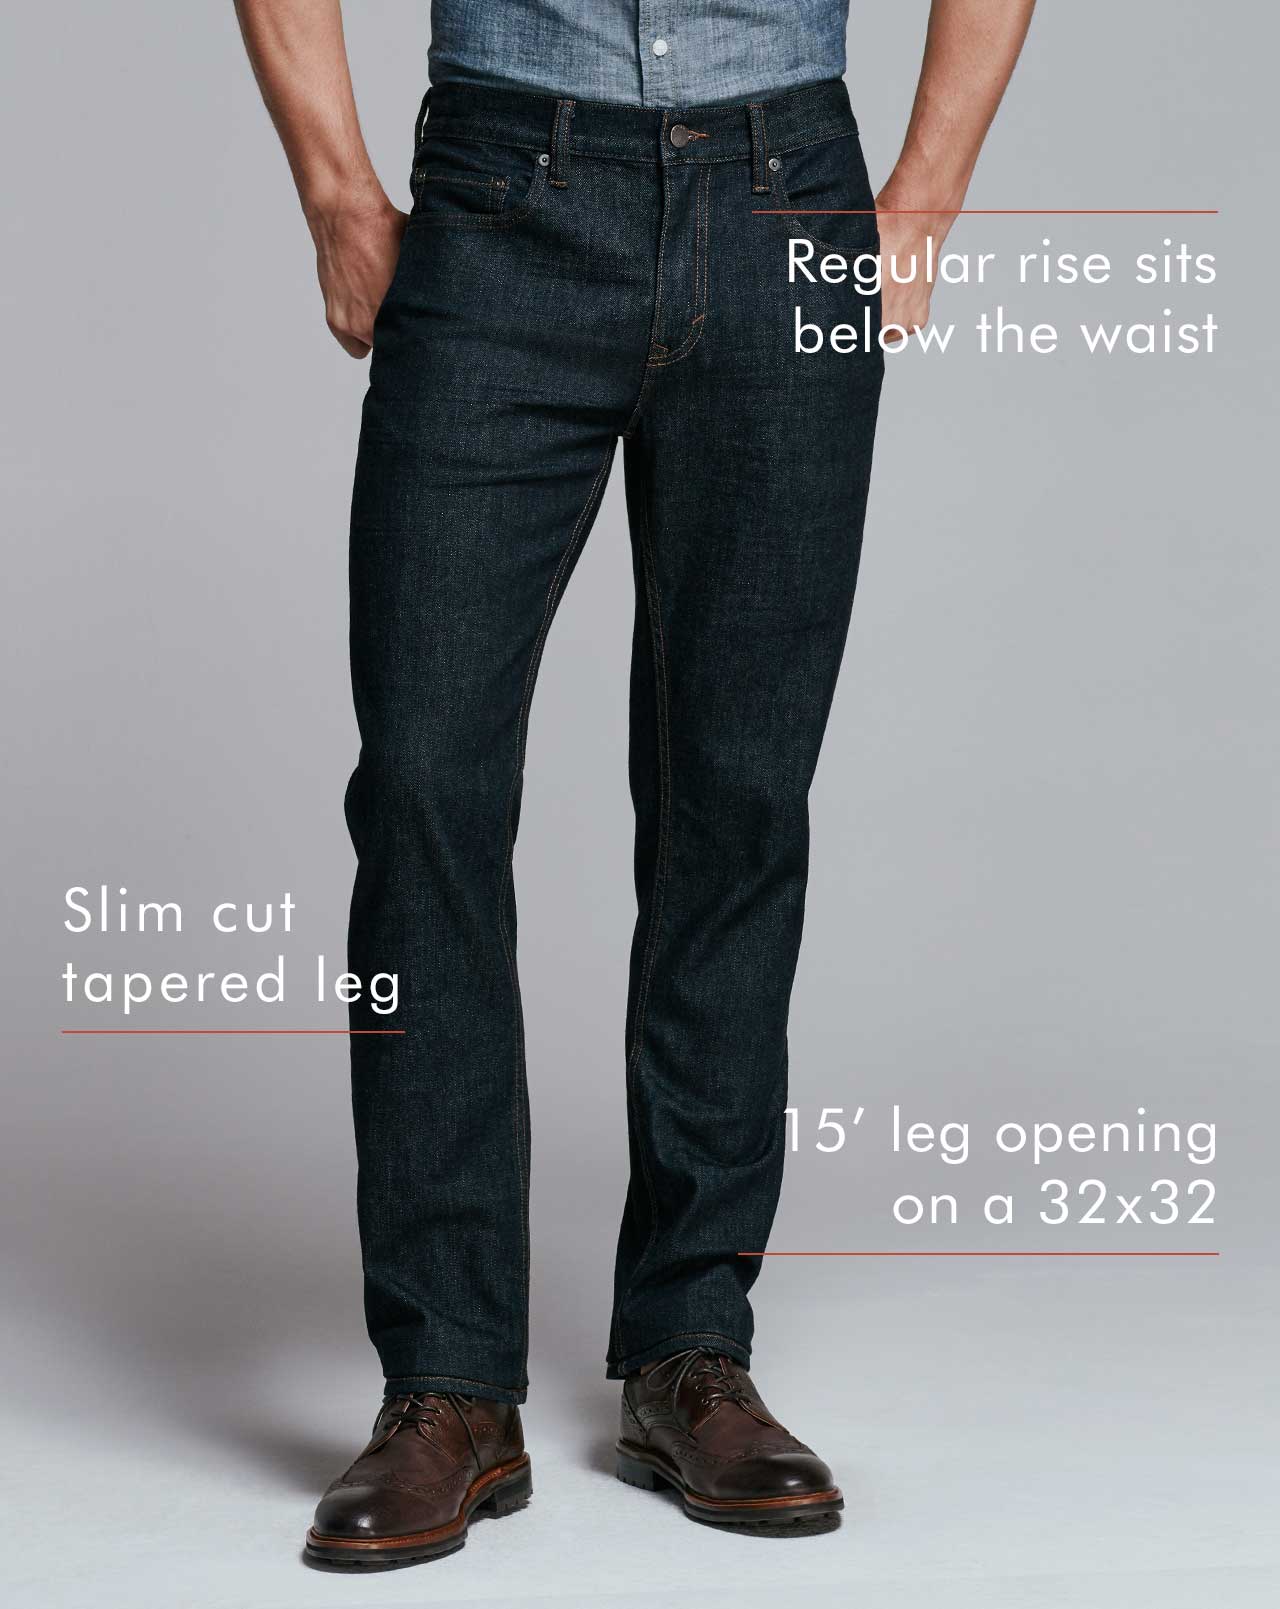 Gap  Mens jeans guide, Ripped jeans men, Mens jeans slim